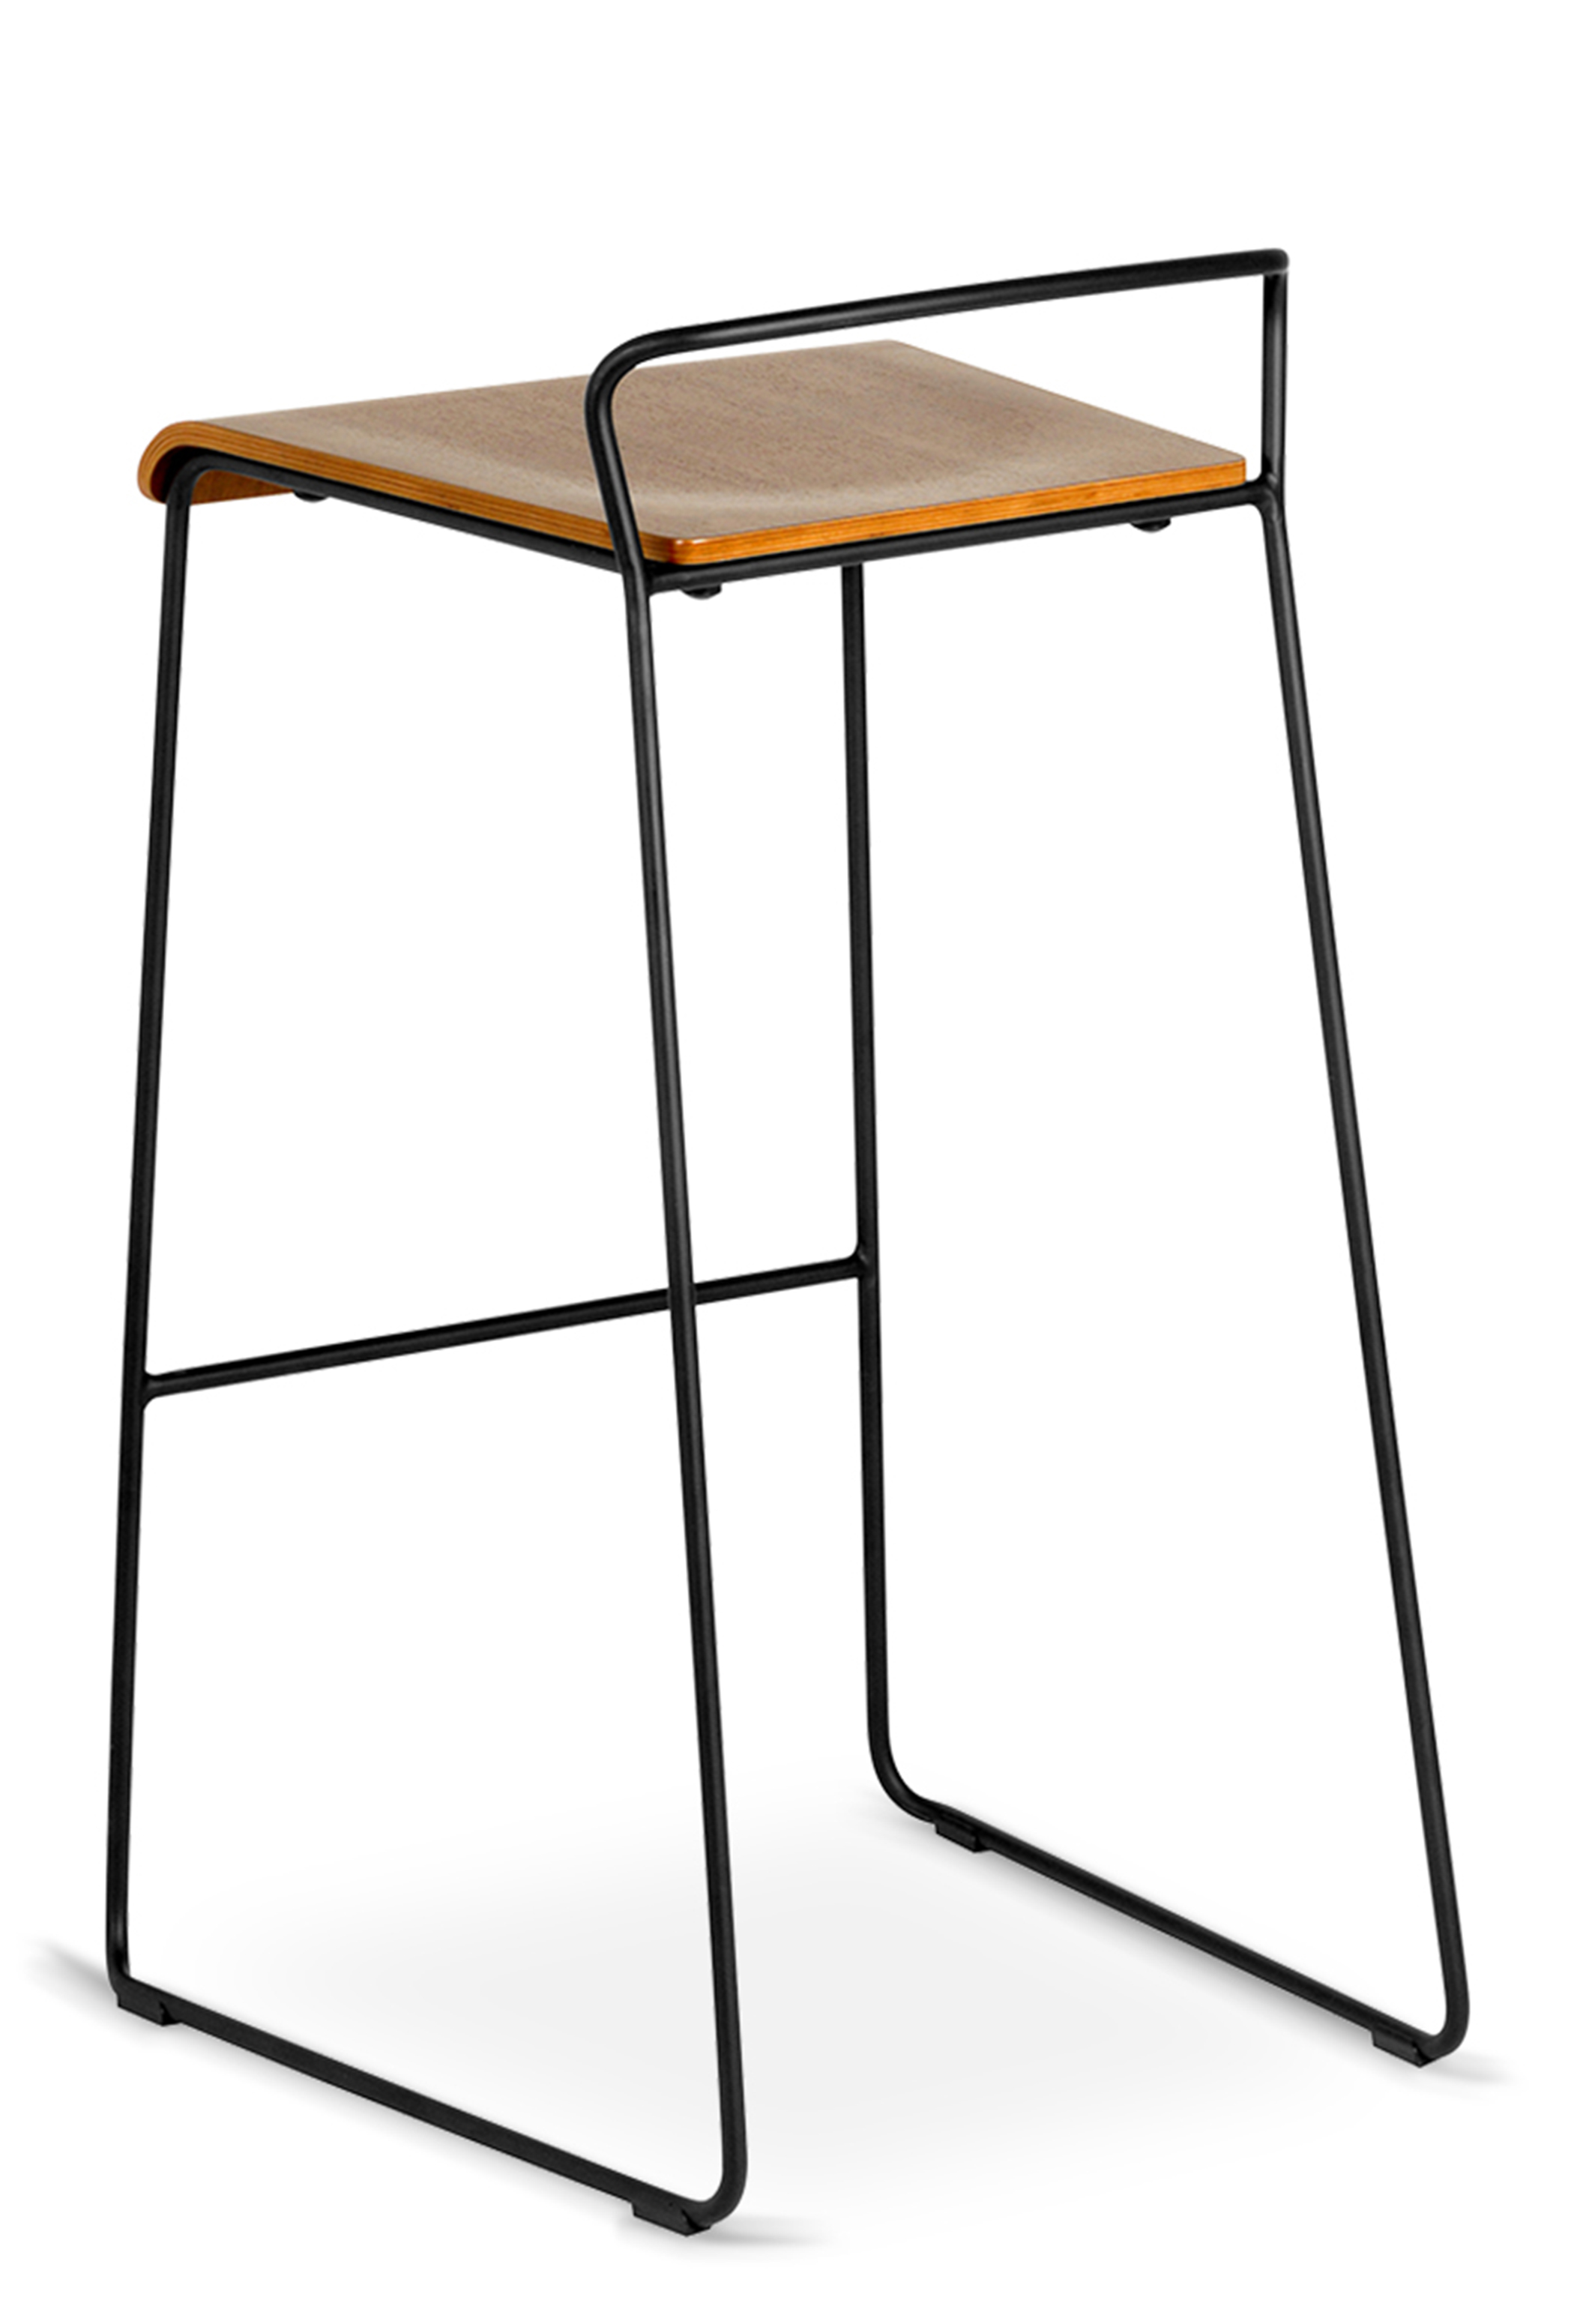 WS - Transit high stool - Walnut (Back angle)